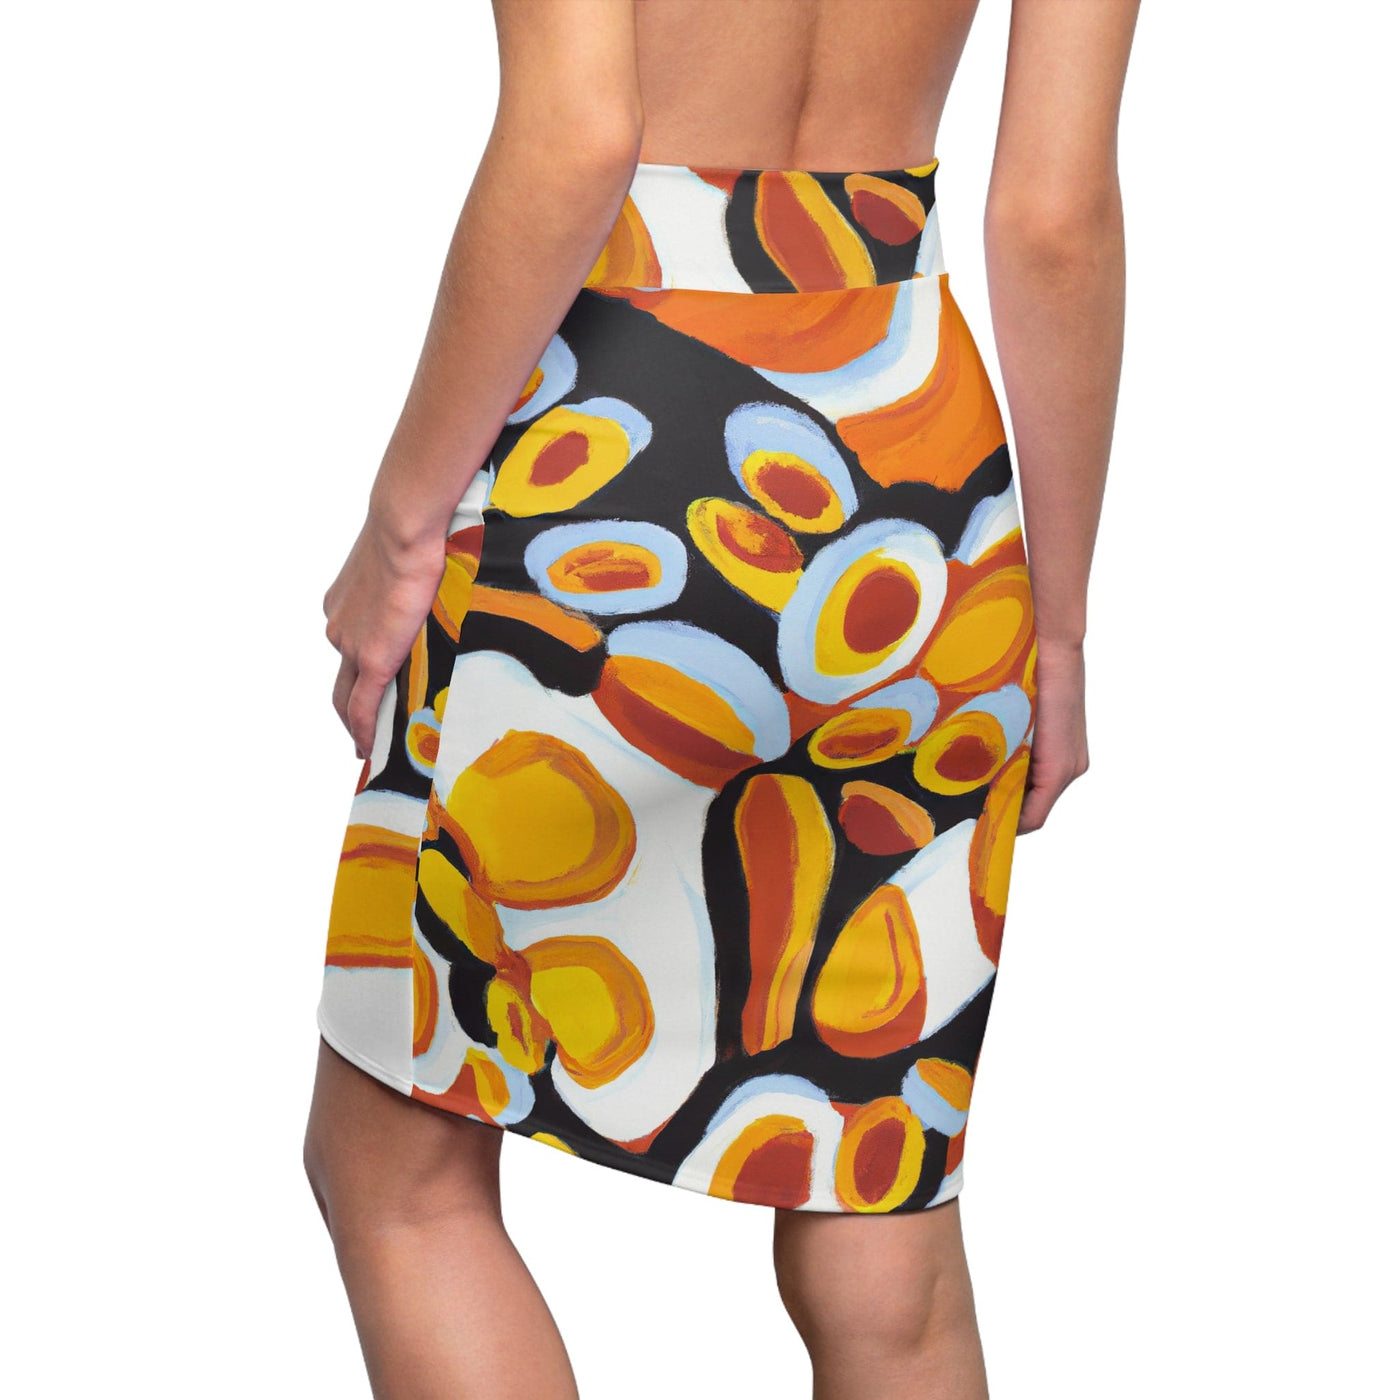 High Waist Womens Pencil Skirt - Contour Stretch - Orange Black White Geometric